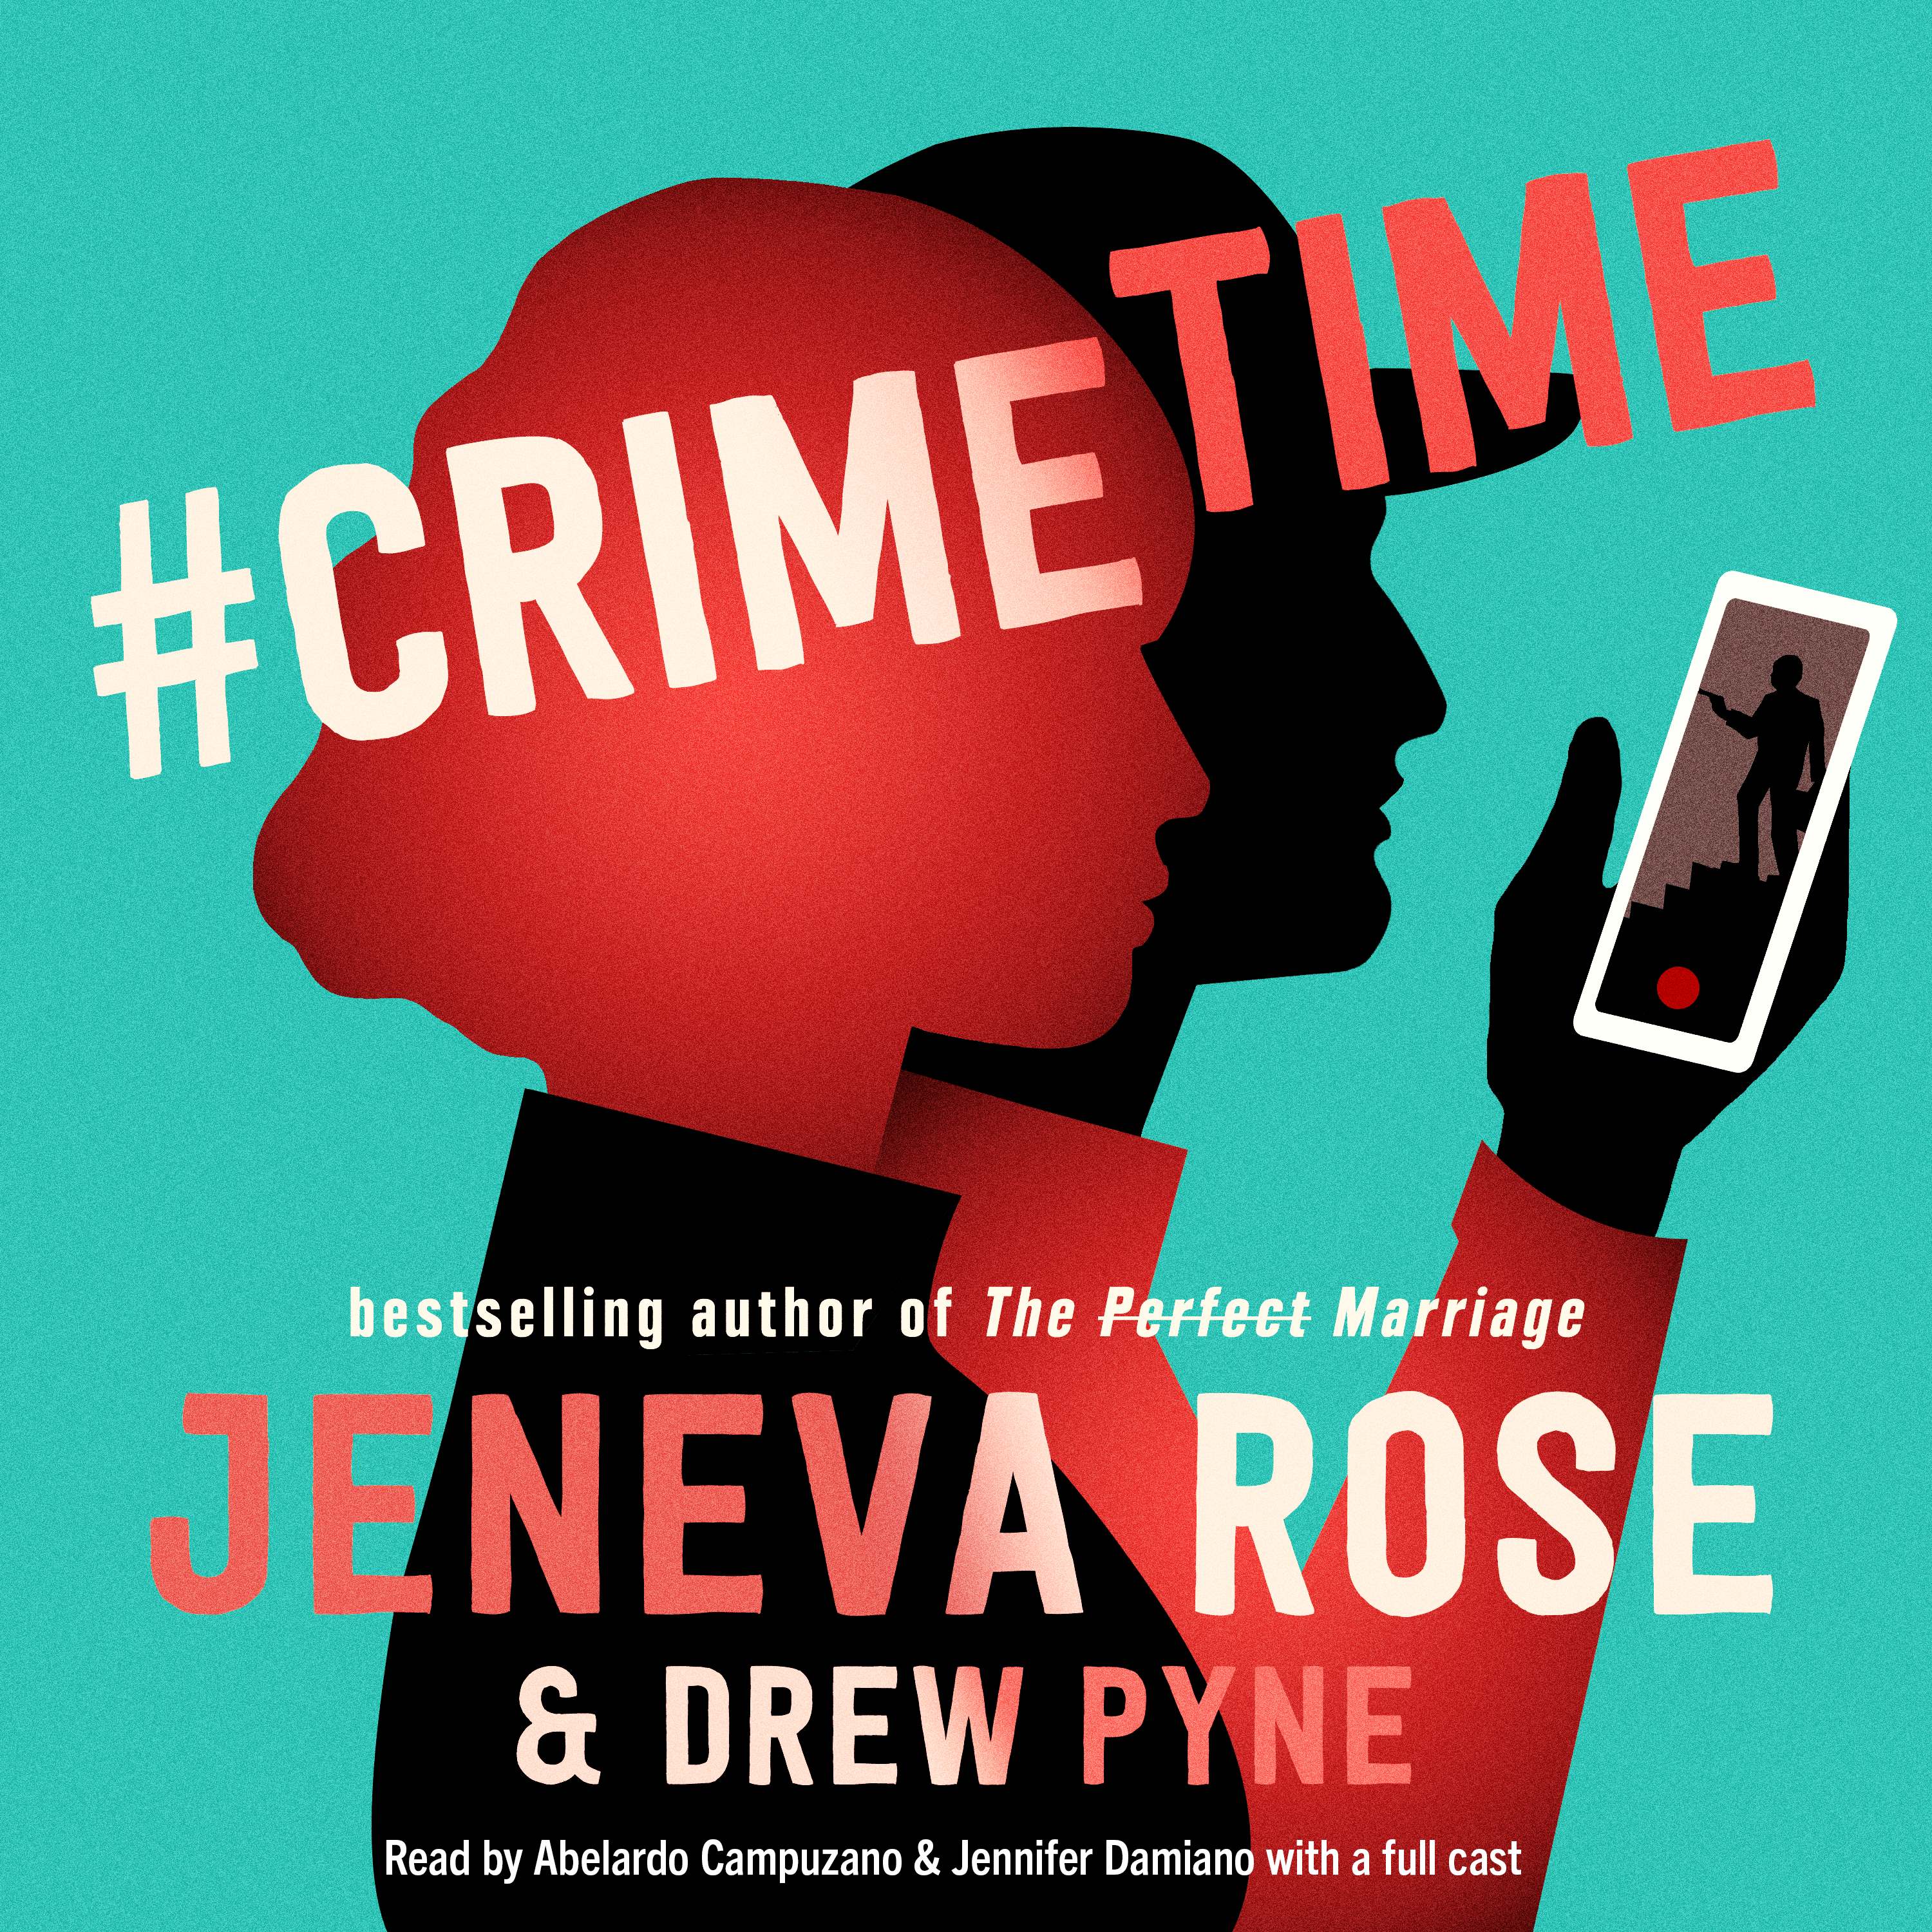 #CrimeTime by Jeneva Rose and Drew Pyne #bookreview #audiobook